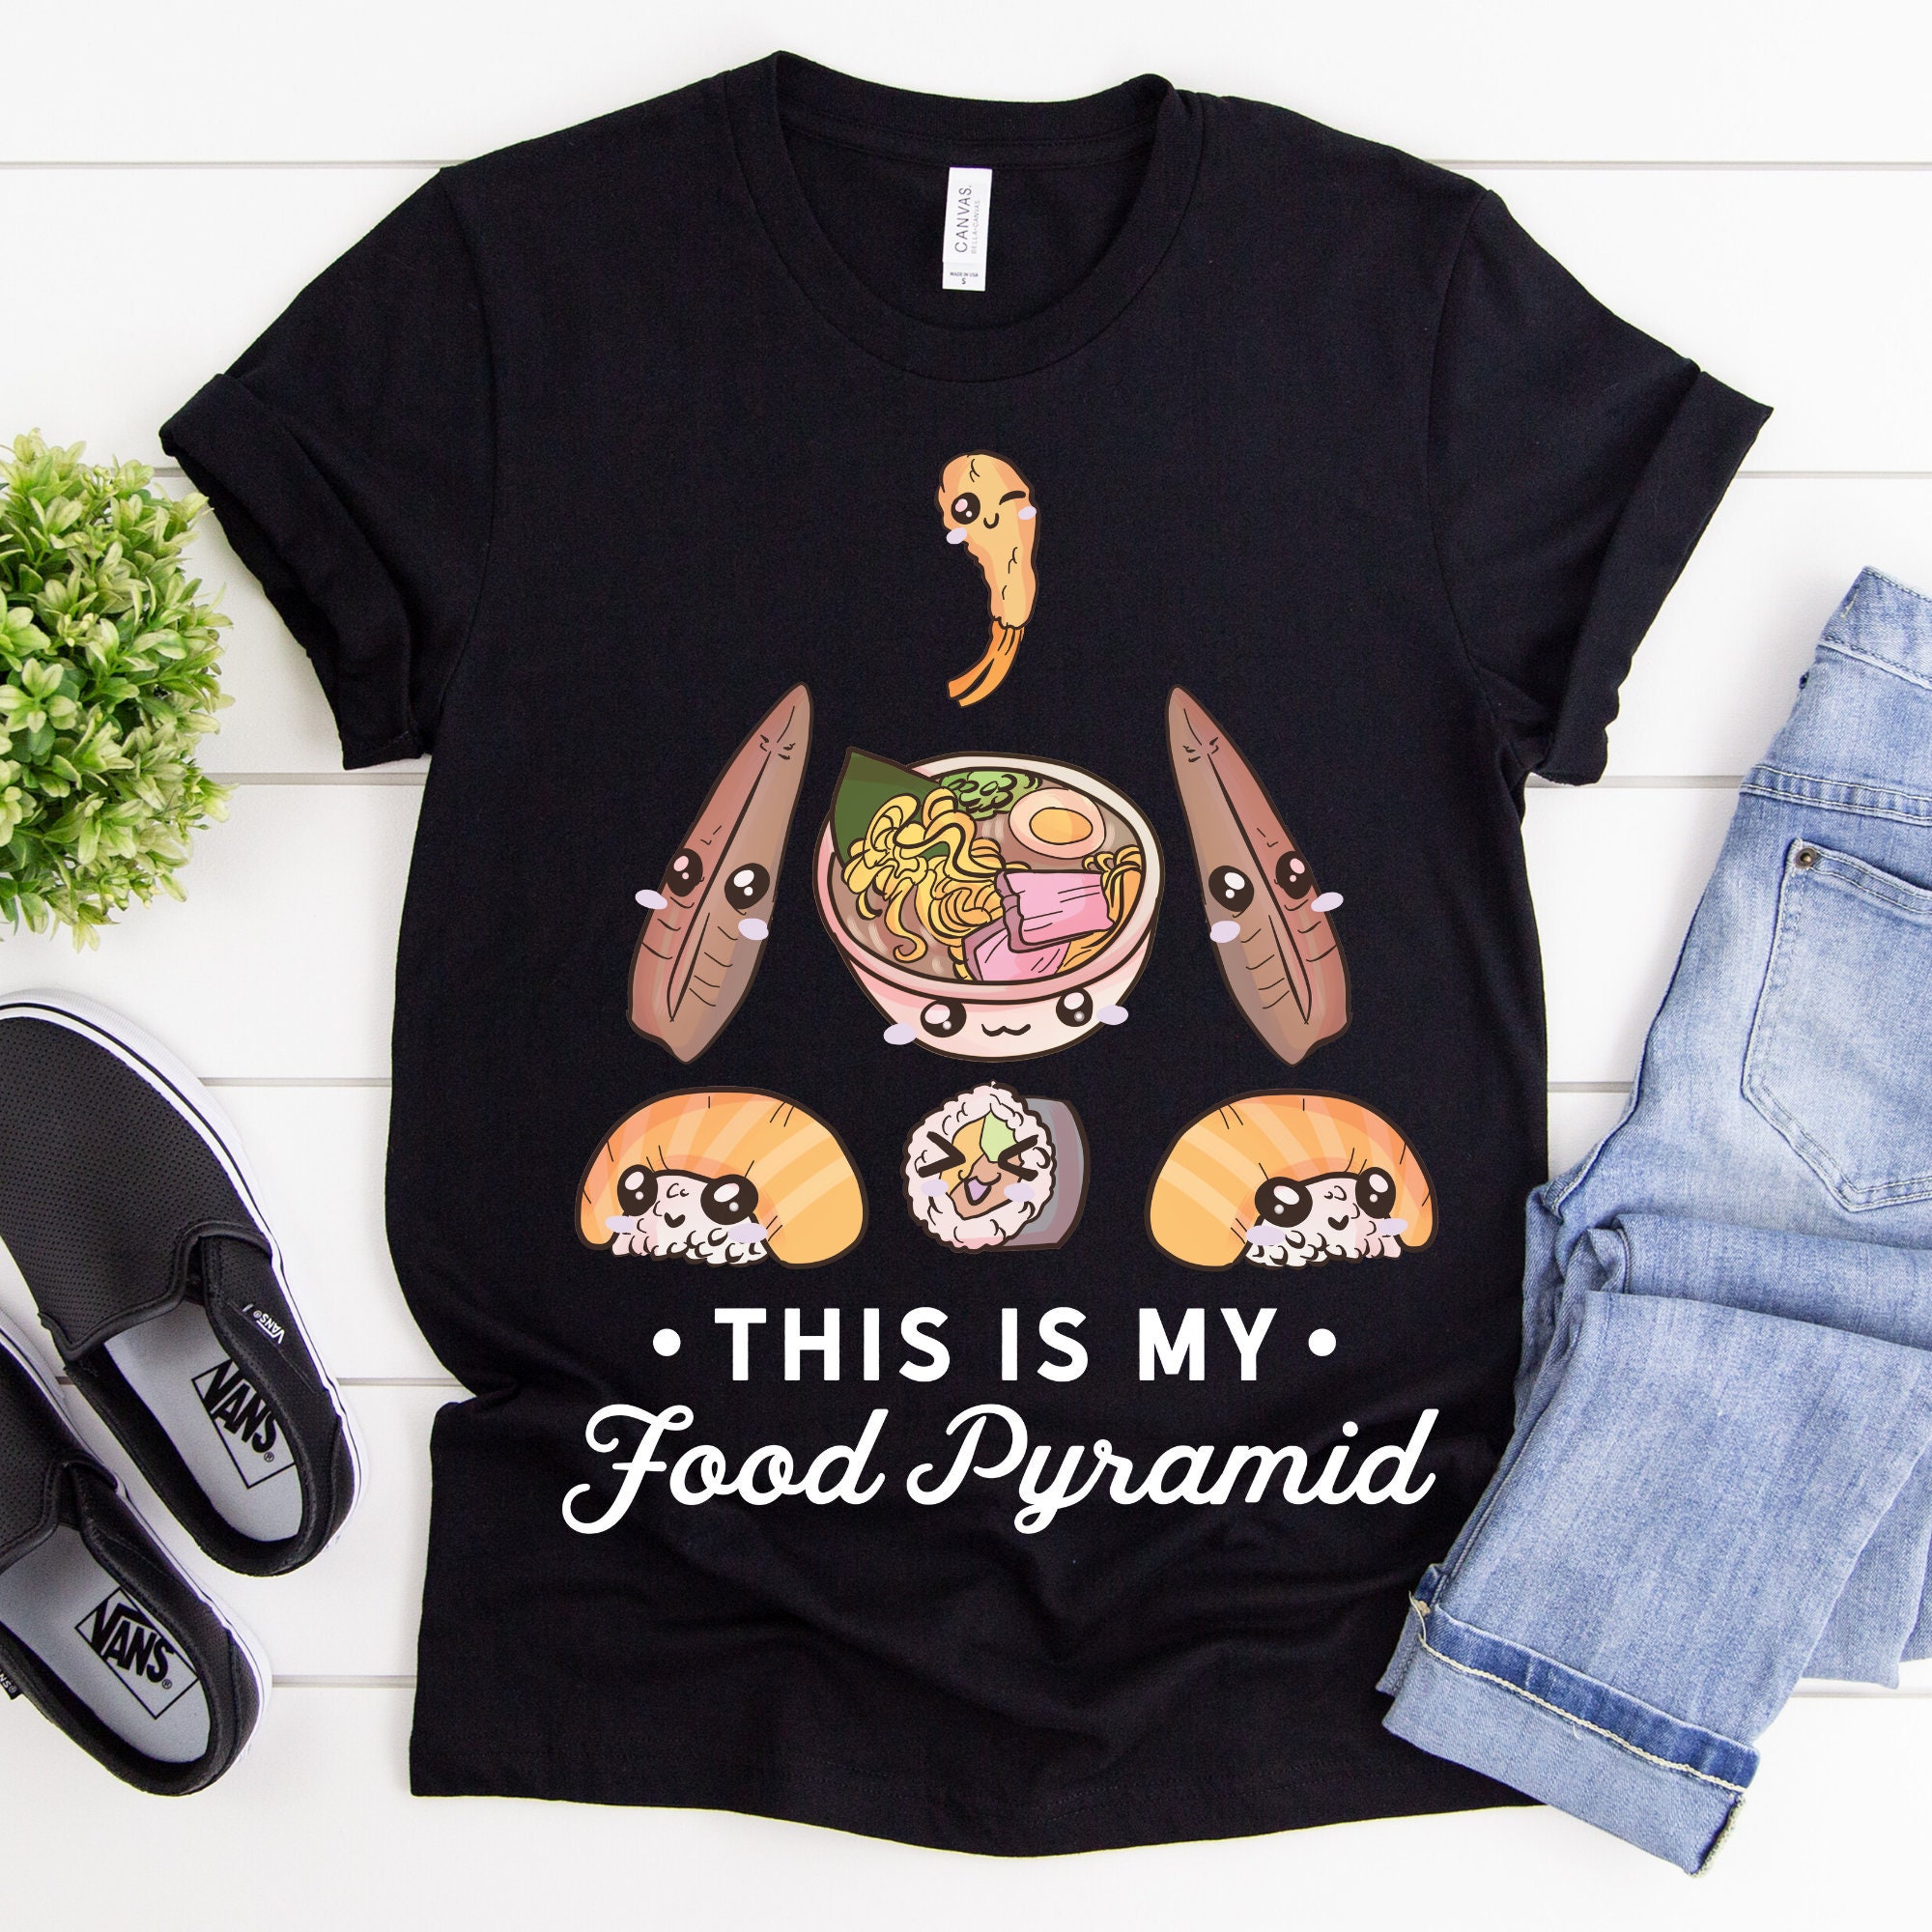 This Is My Food Pyramid, Japanese Food, T-Shirt, Kawaii, Tempura, Sushi, Ramen, Squid, Shrimp Pun, Foodie